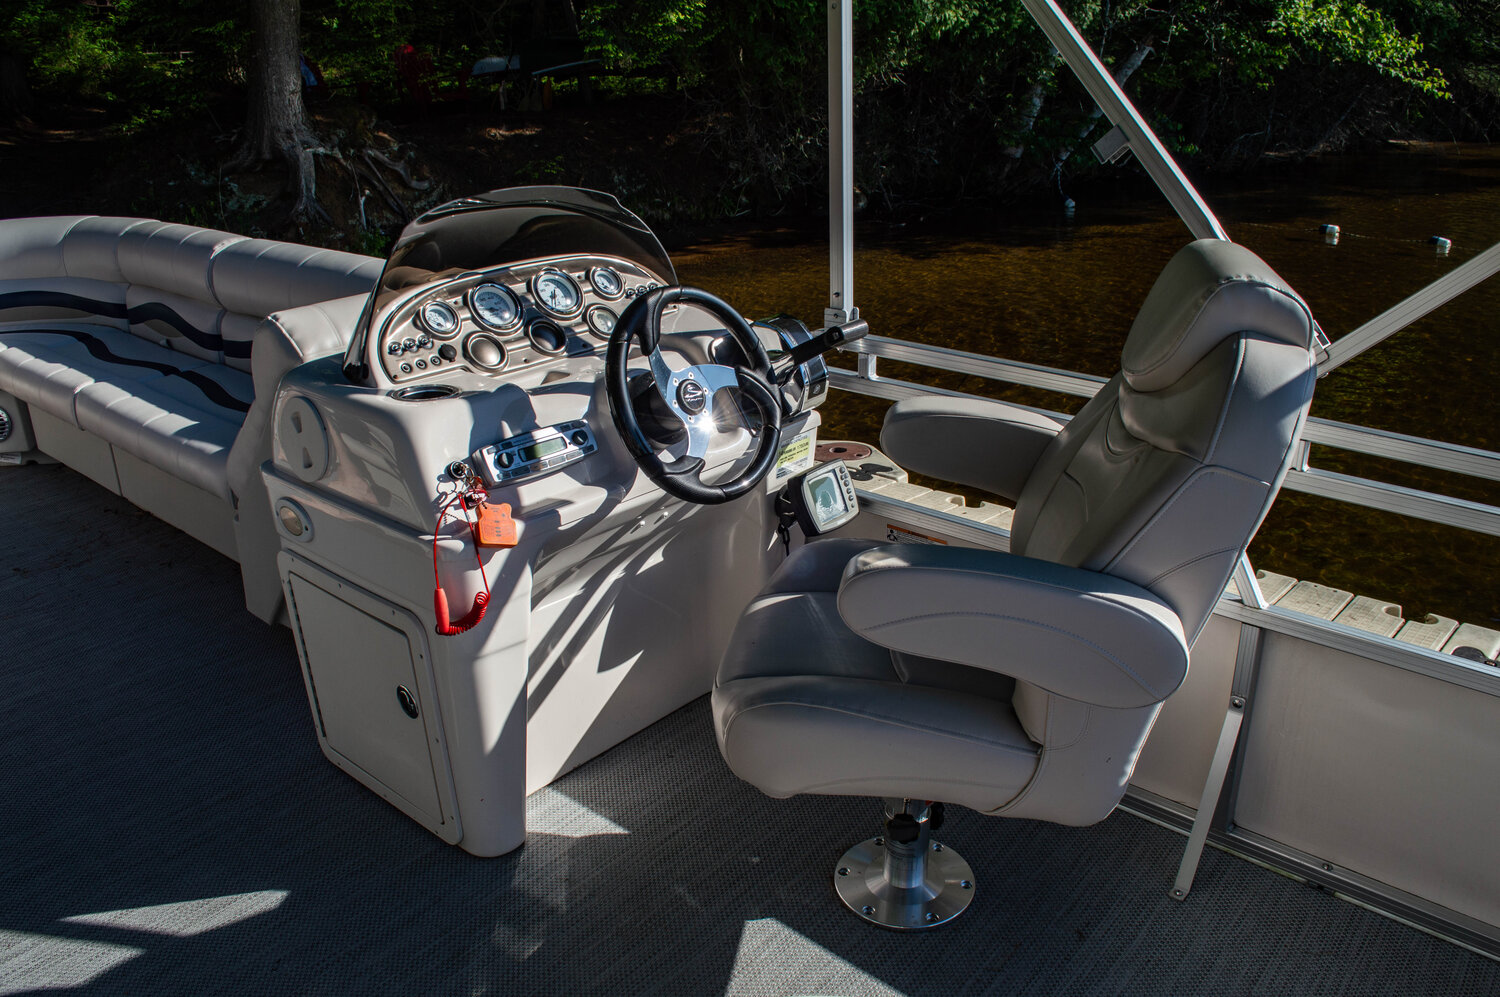 Luxury Pontoon Boat Rental Upper Saranac Lake, NY